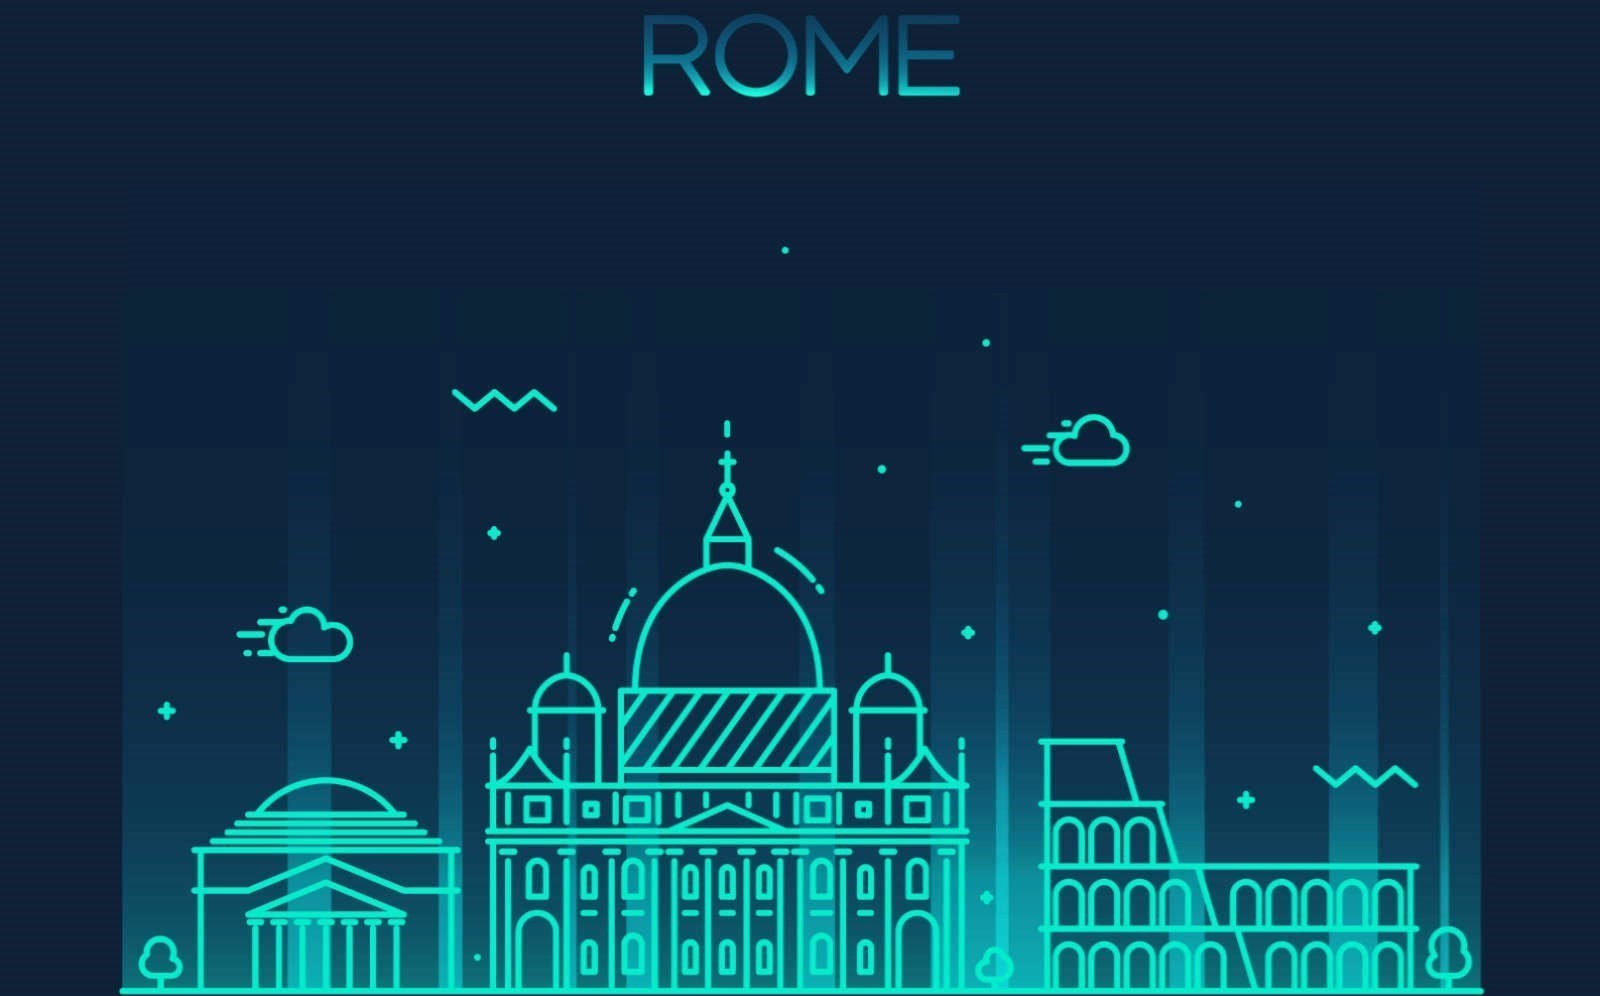 Rome City Hall Part 1